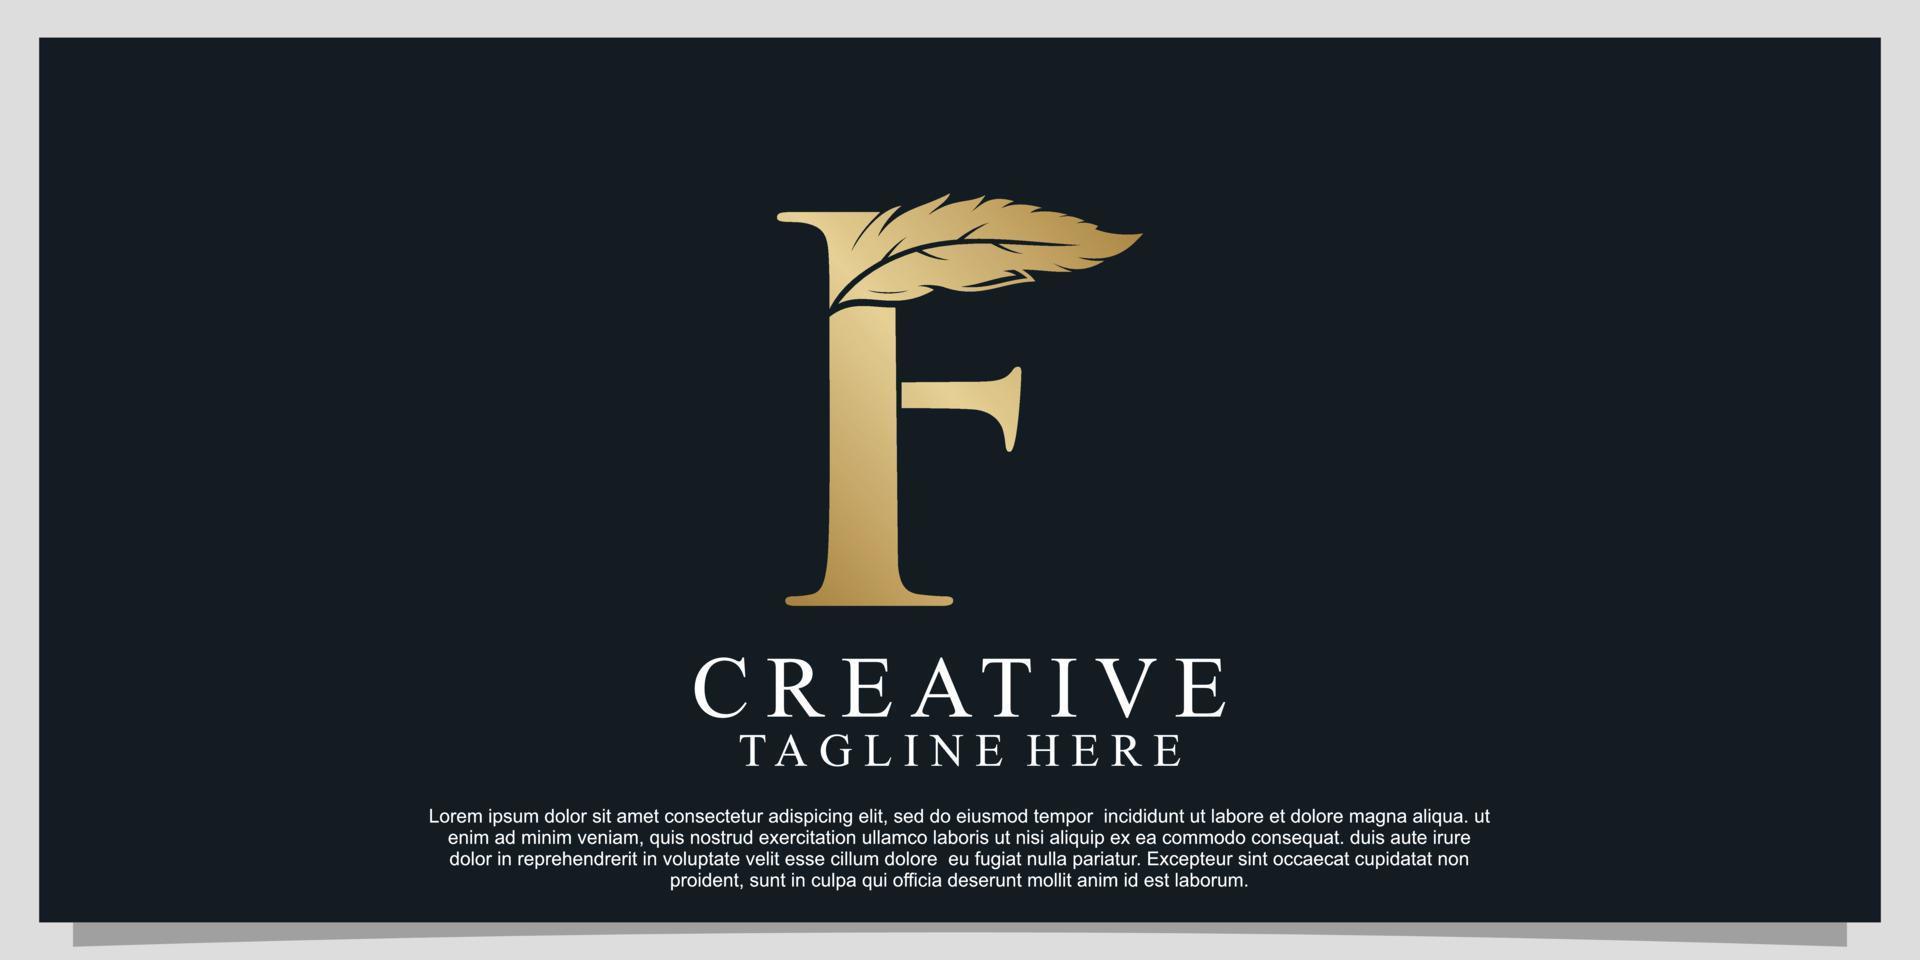 Golden letter F with unique feather combination logo design Premium Vector